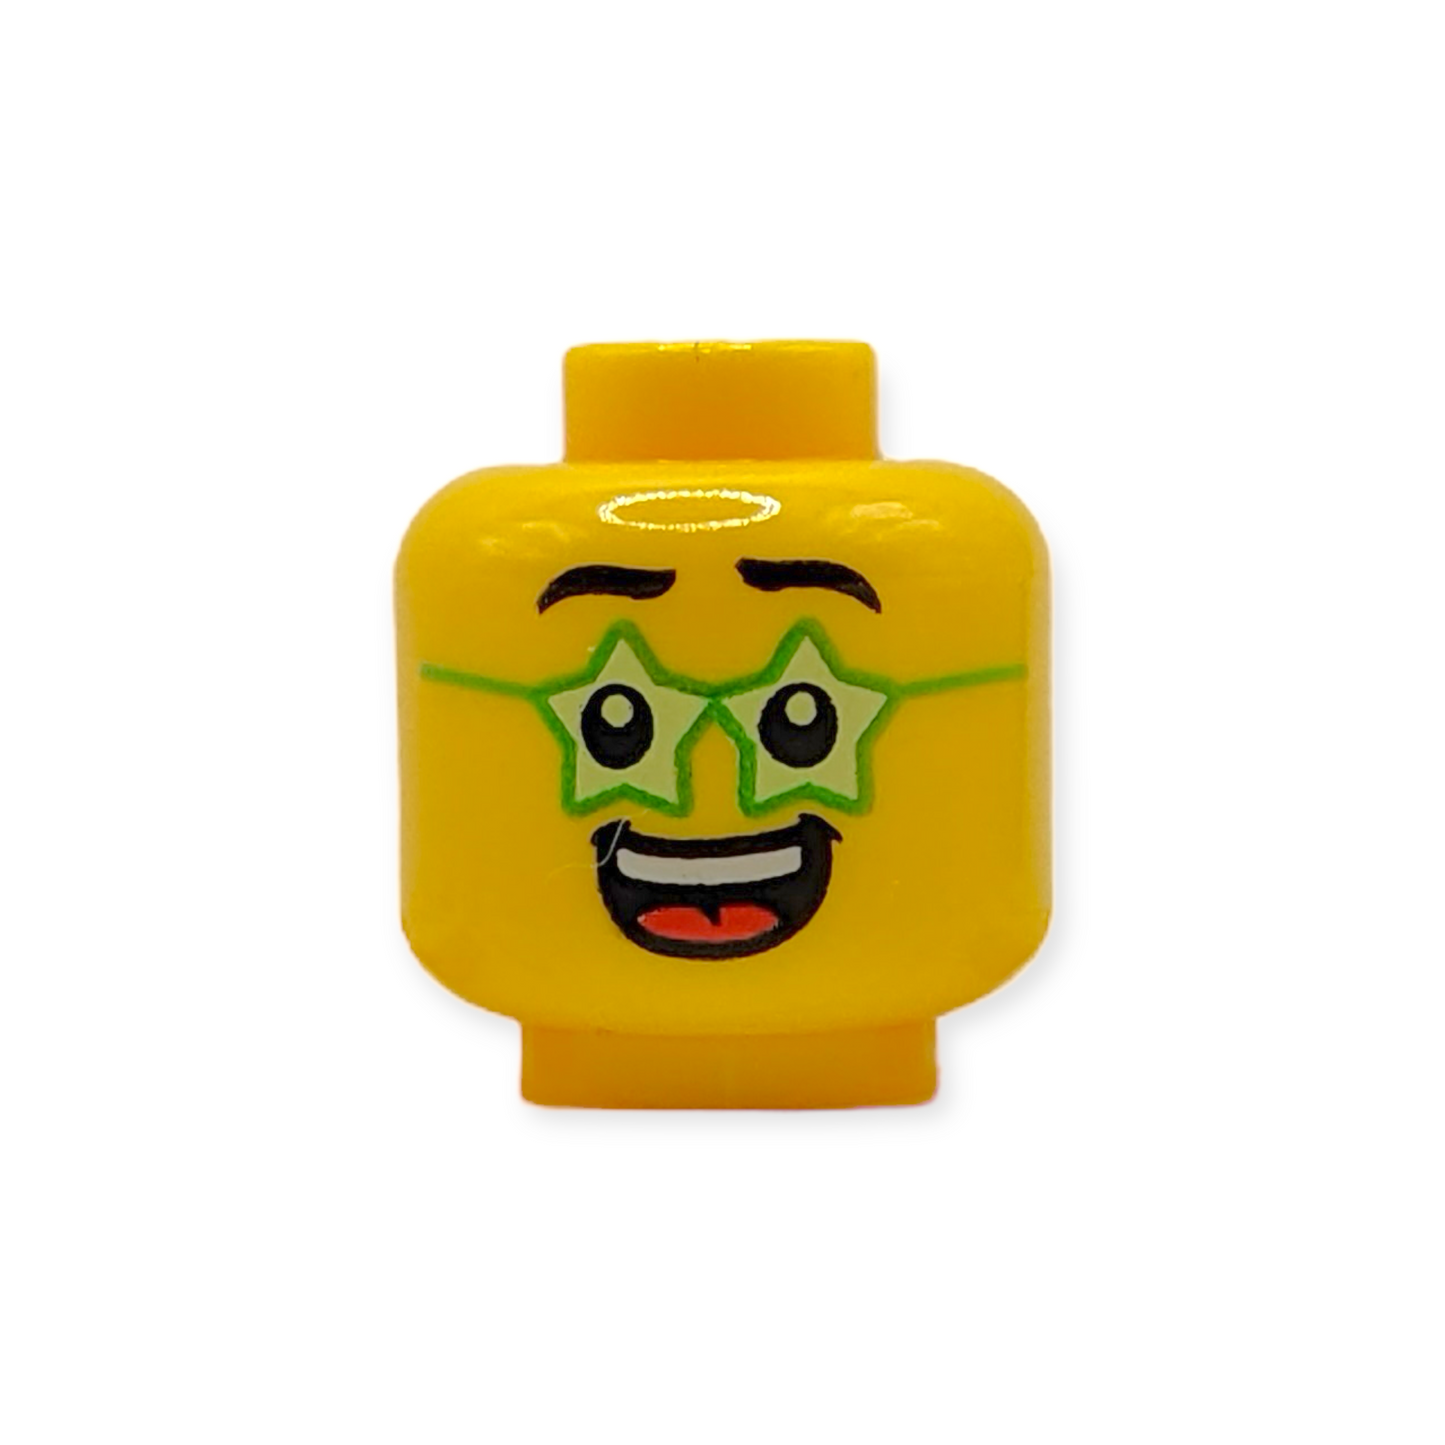 LEGO Head - 3131 Black Eyebrows, Green Glasses Star Shaped